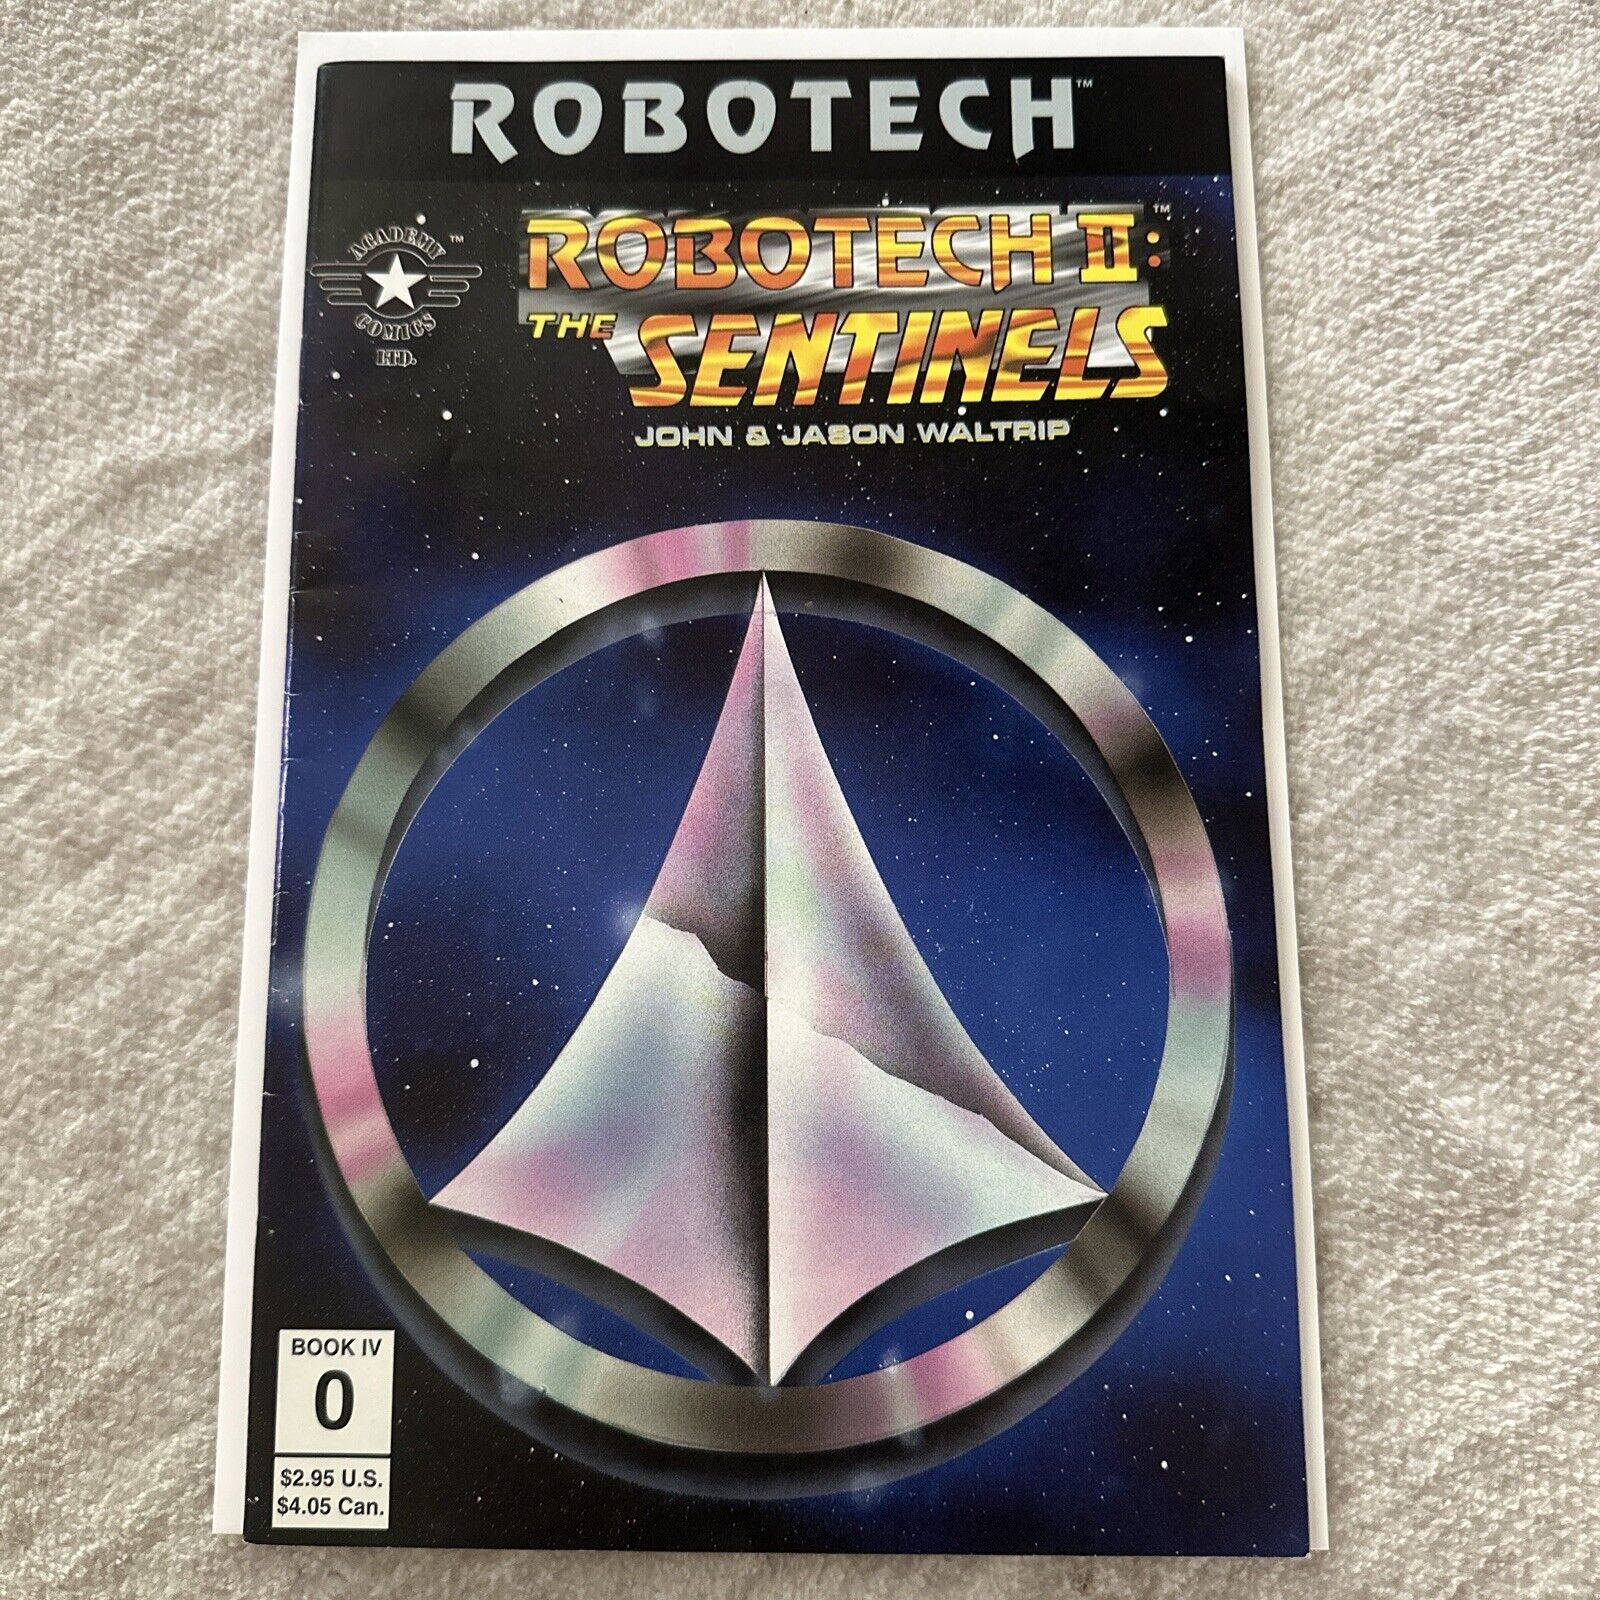 Robotech II: The Sentinels Book IV #0